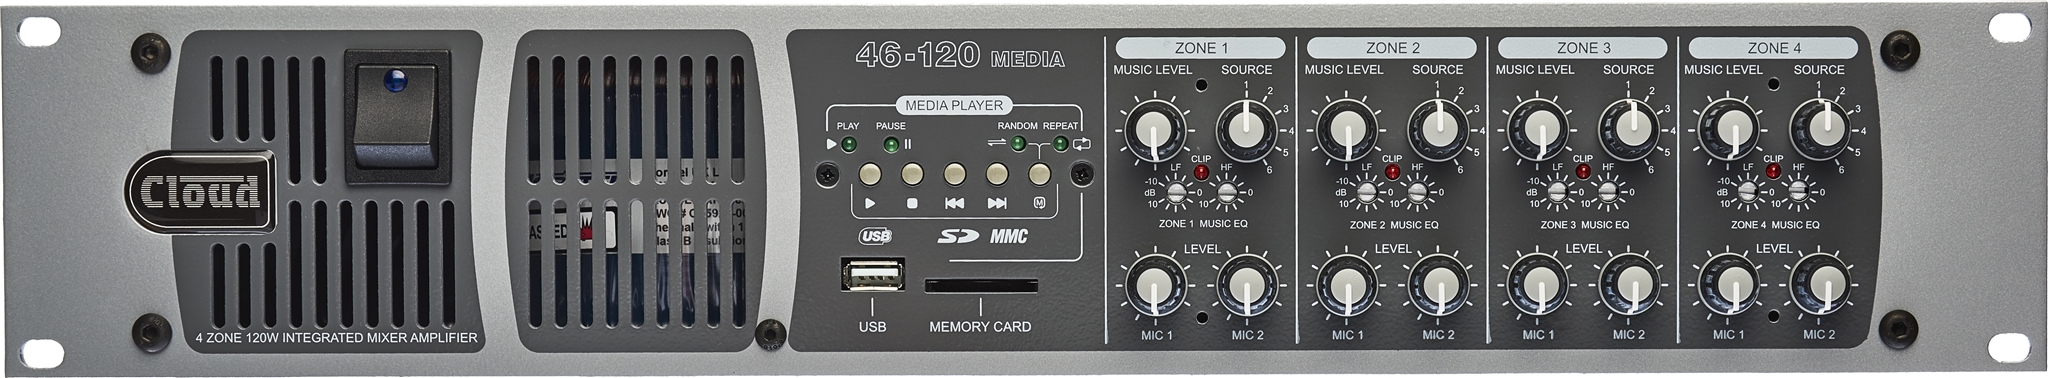 4 Zone Integrated Mixer Amplifier - CLOUD (ENGLAND) _ 46-120TMedia